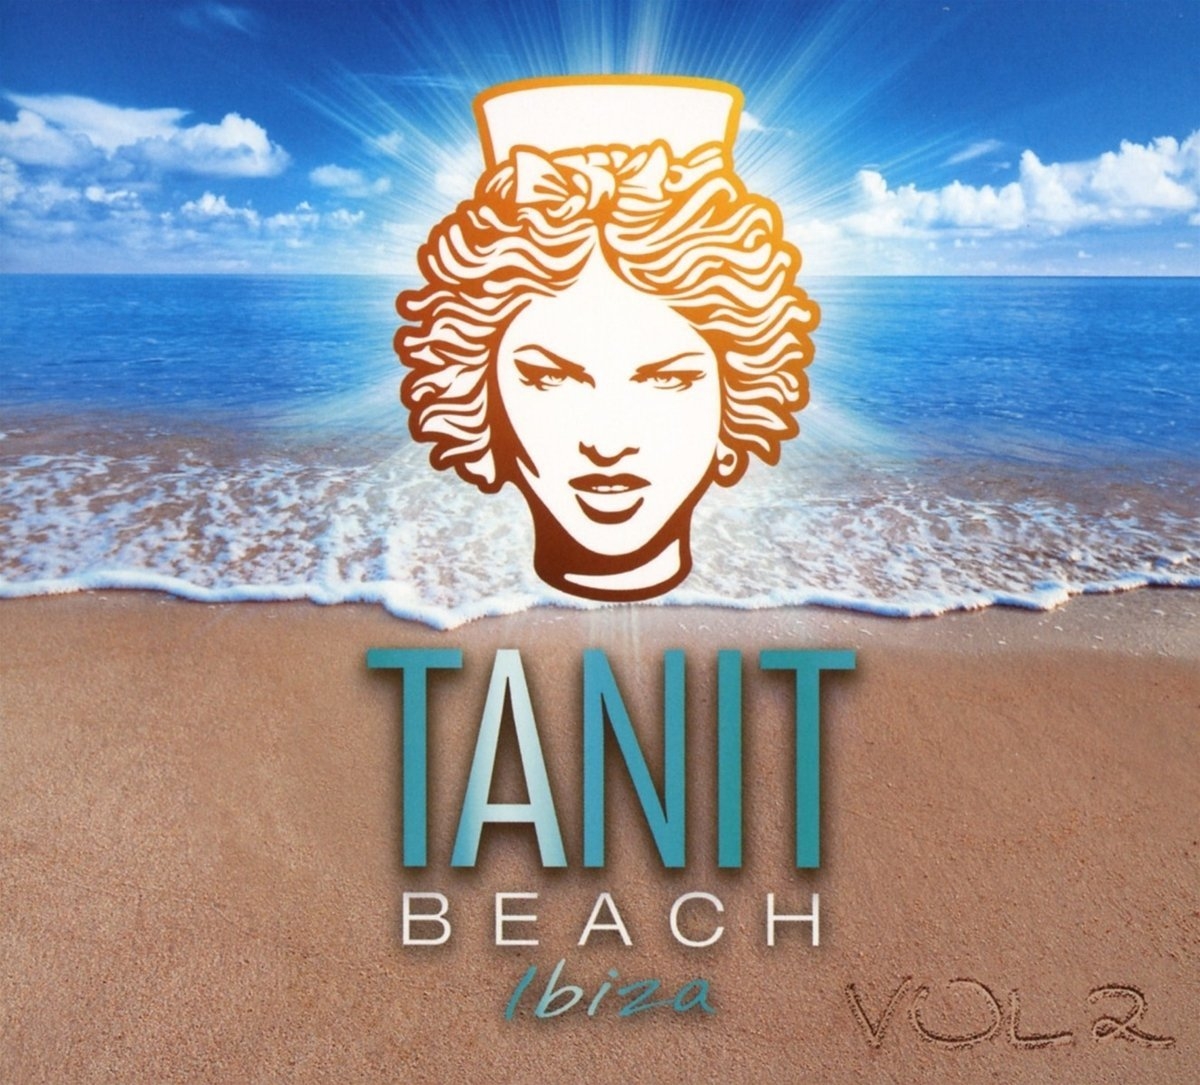 electro 06 18 Tanit Beach